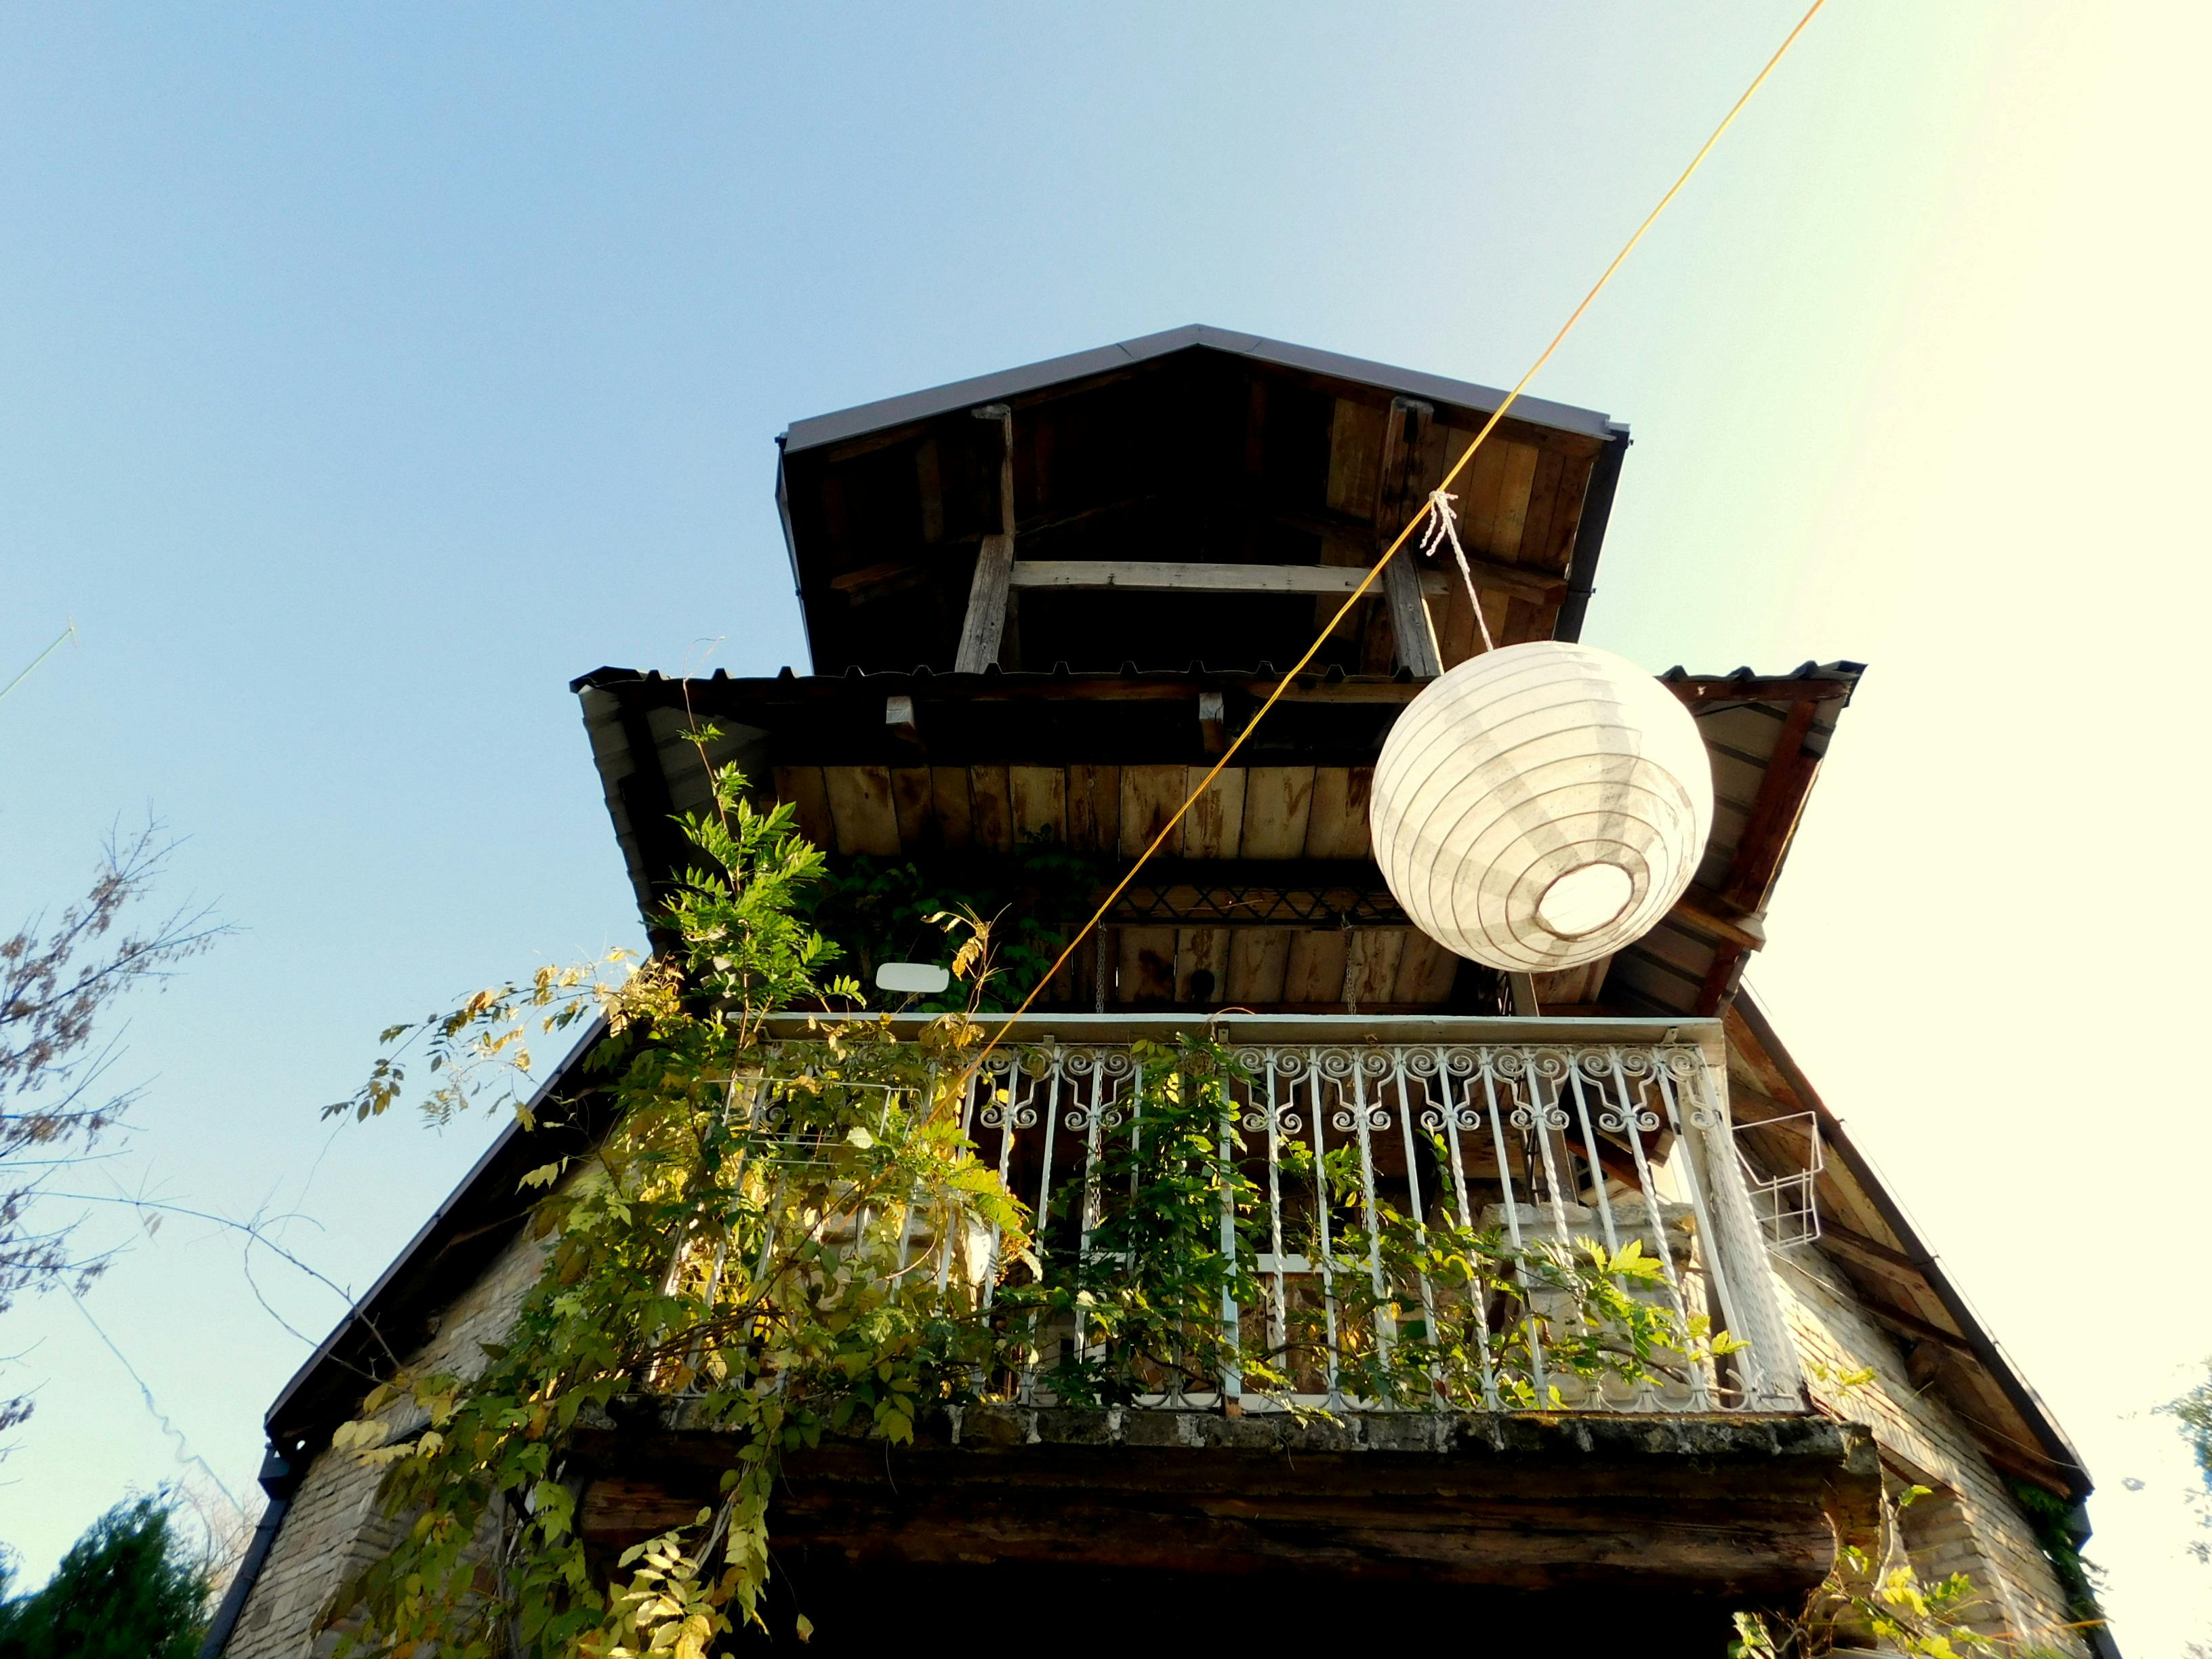 Free stock photo of #rustic #shabby #chic #lantern #house #serbia